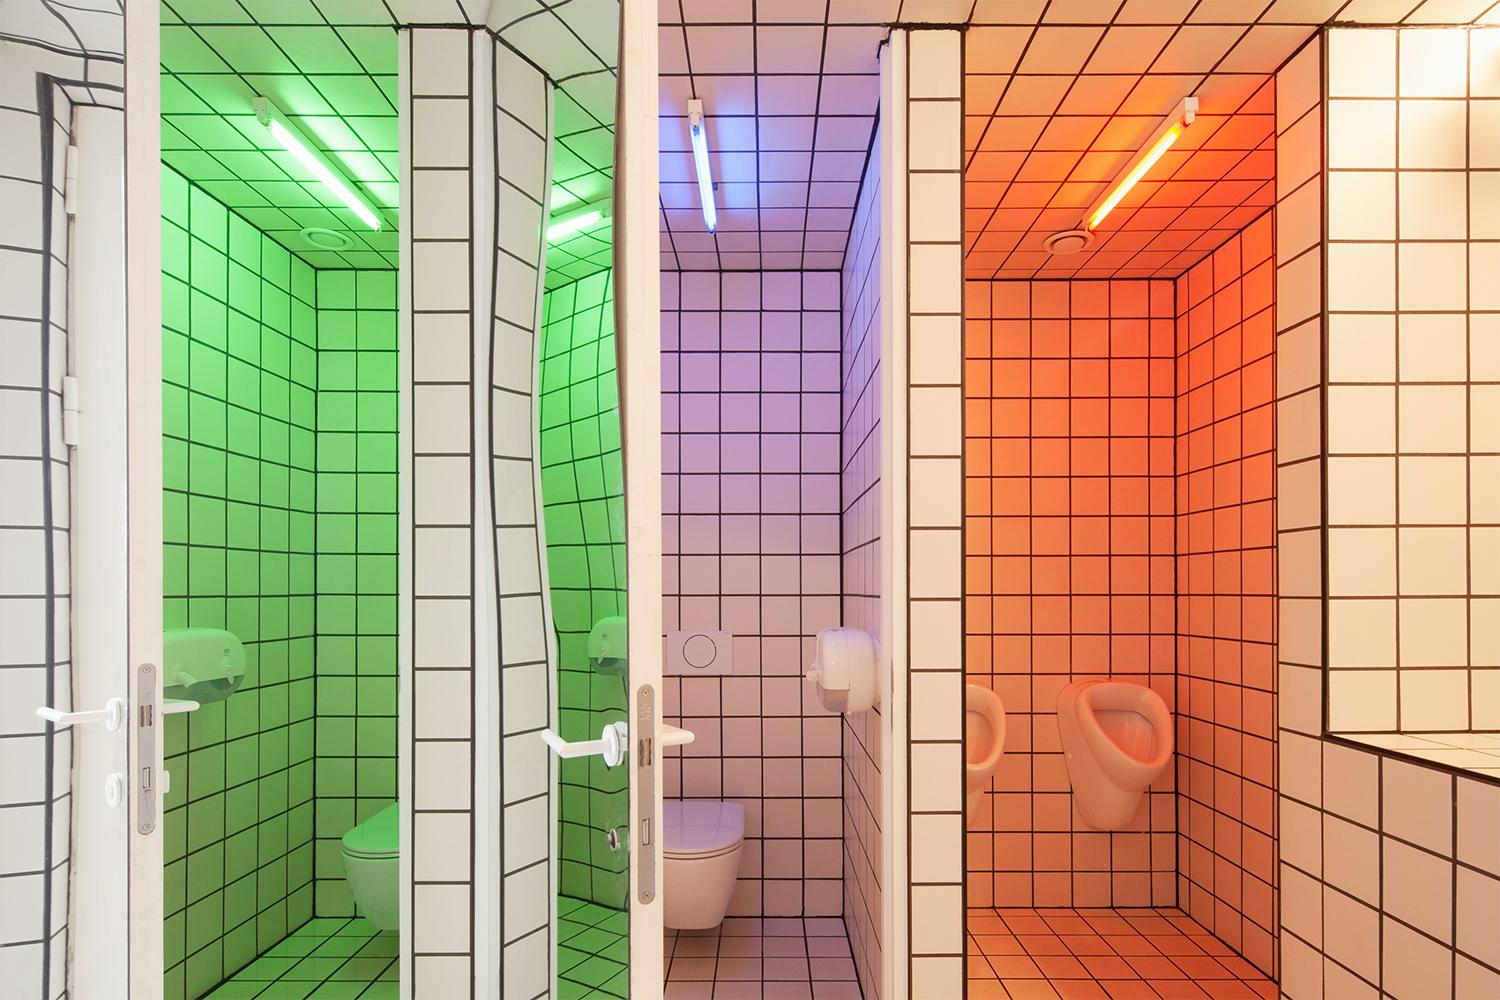 kleurrijke toiletten in café Eltòn in stationsbuurt Gent-Sint-Pieters